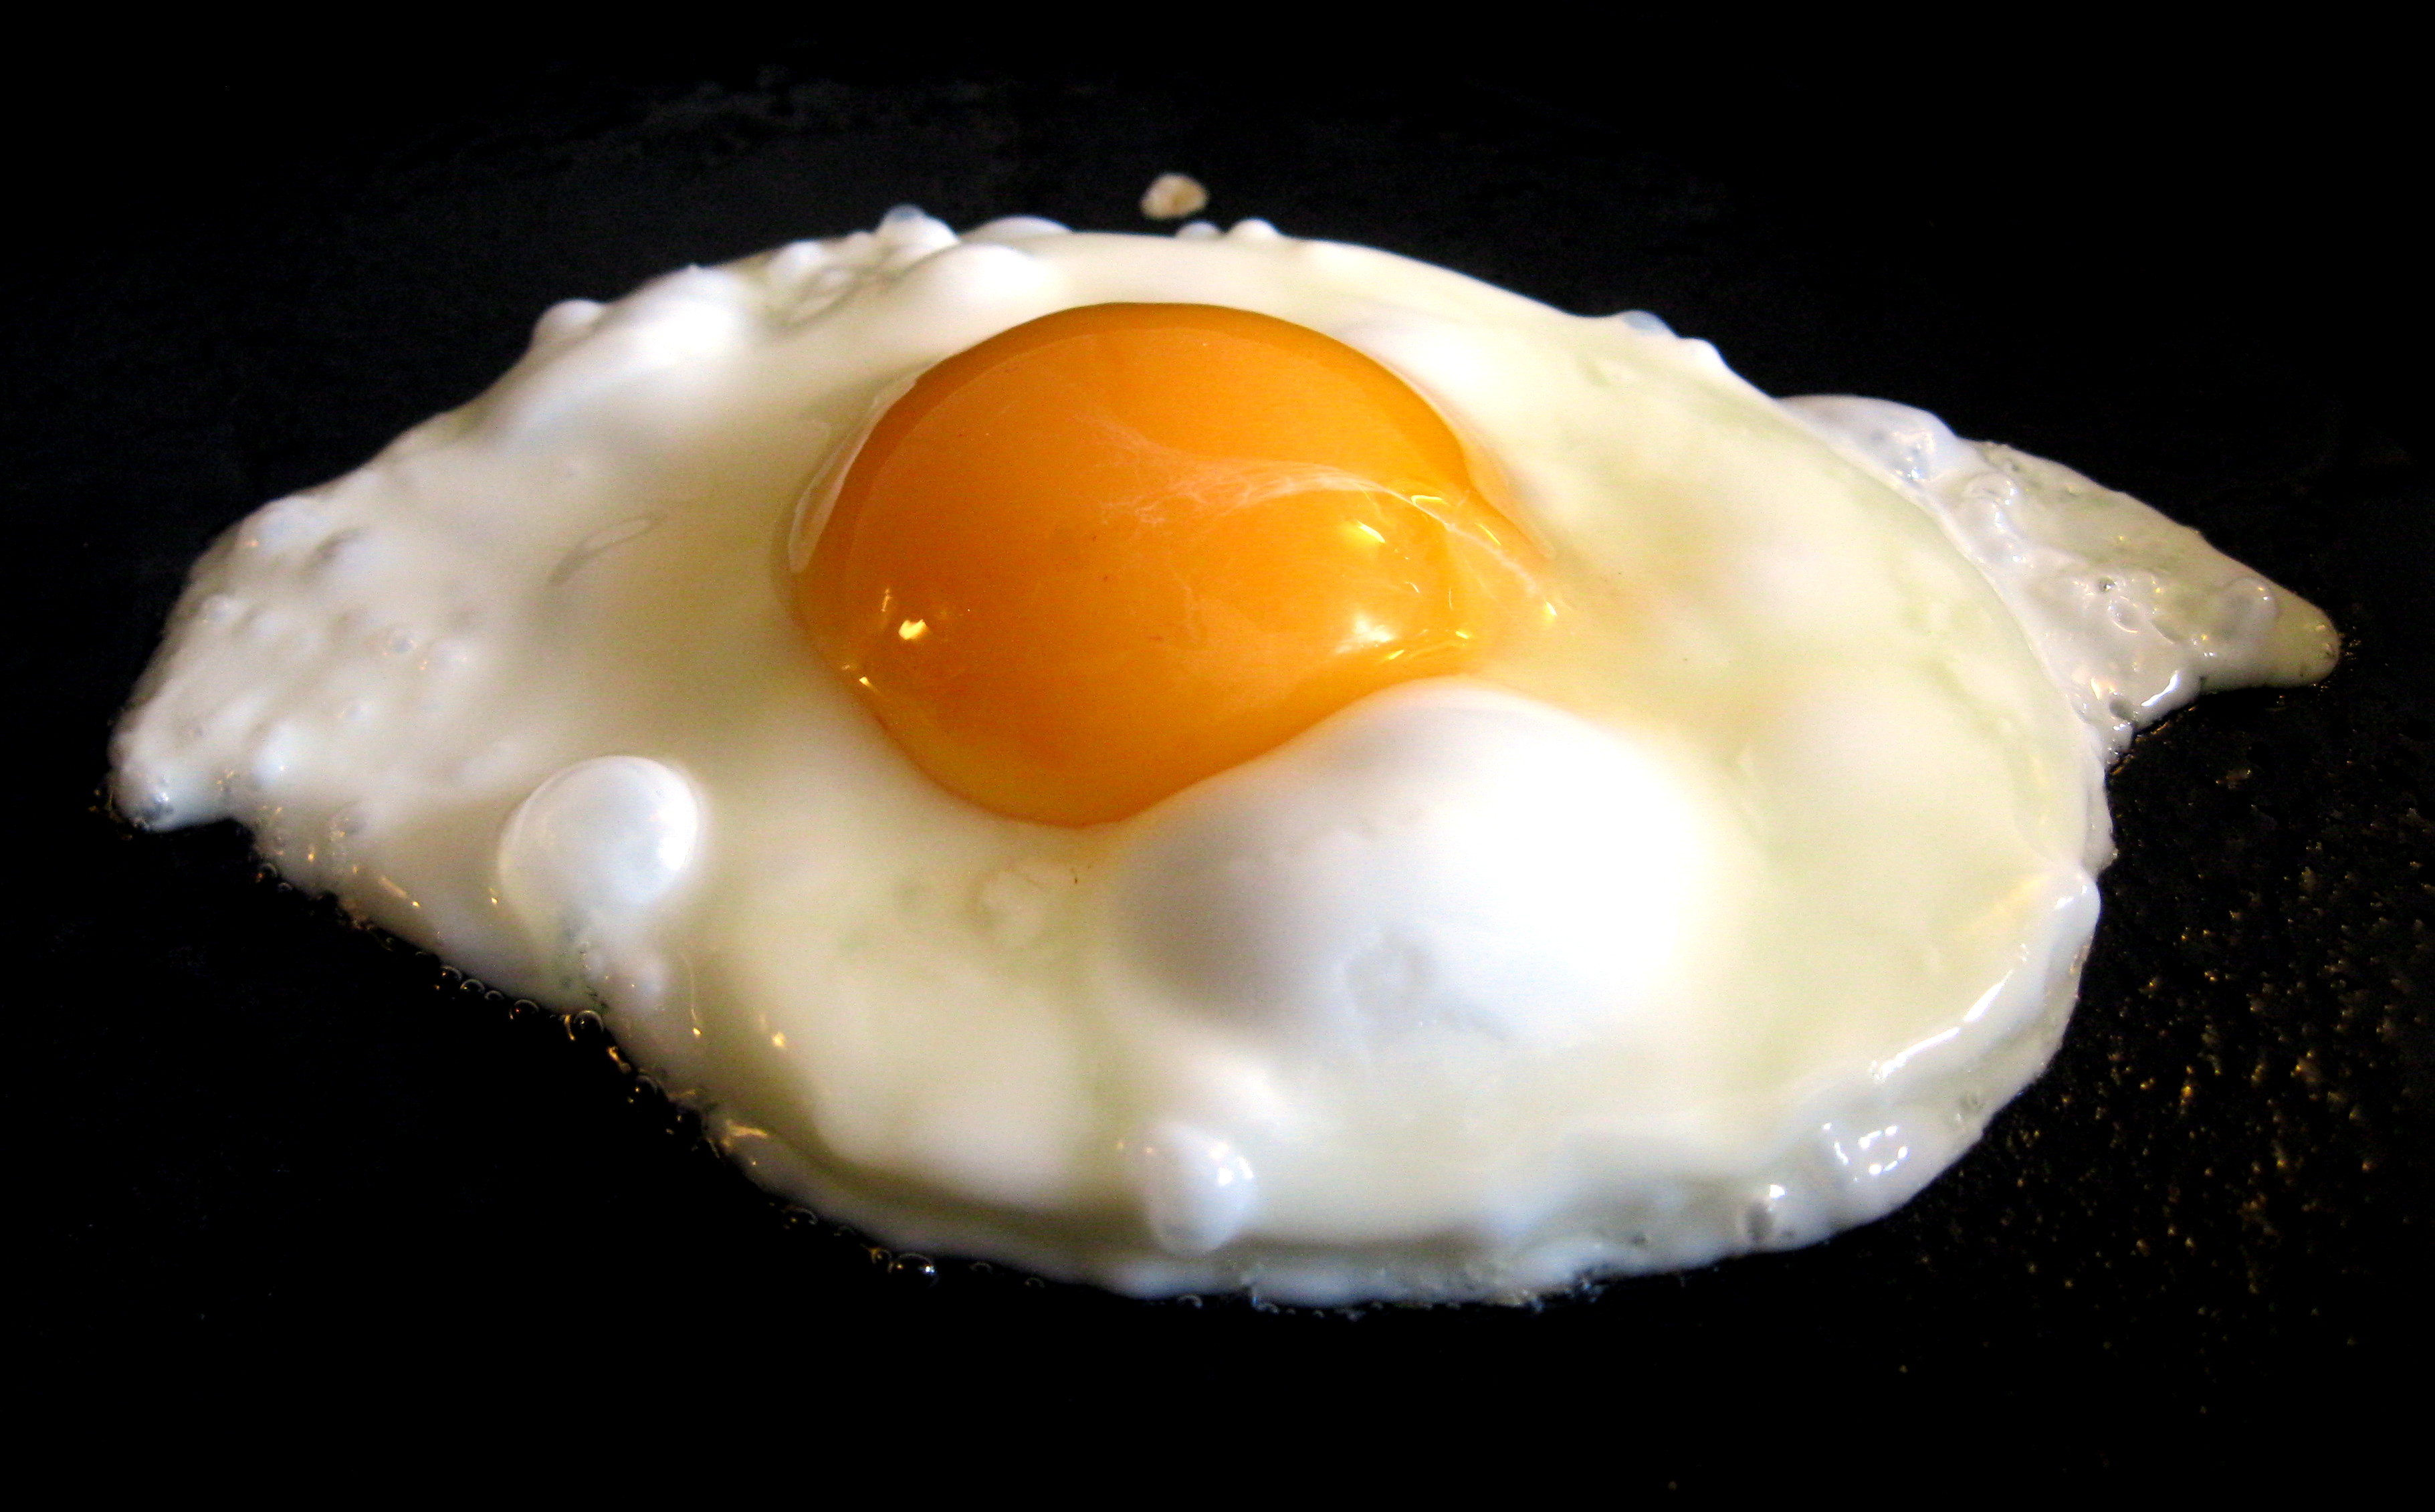 Fried egg - Wikipedia